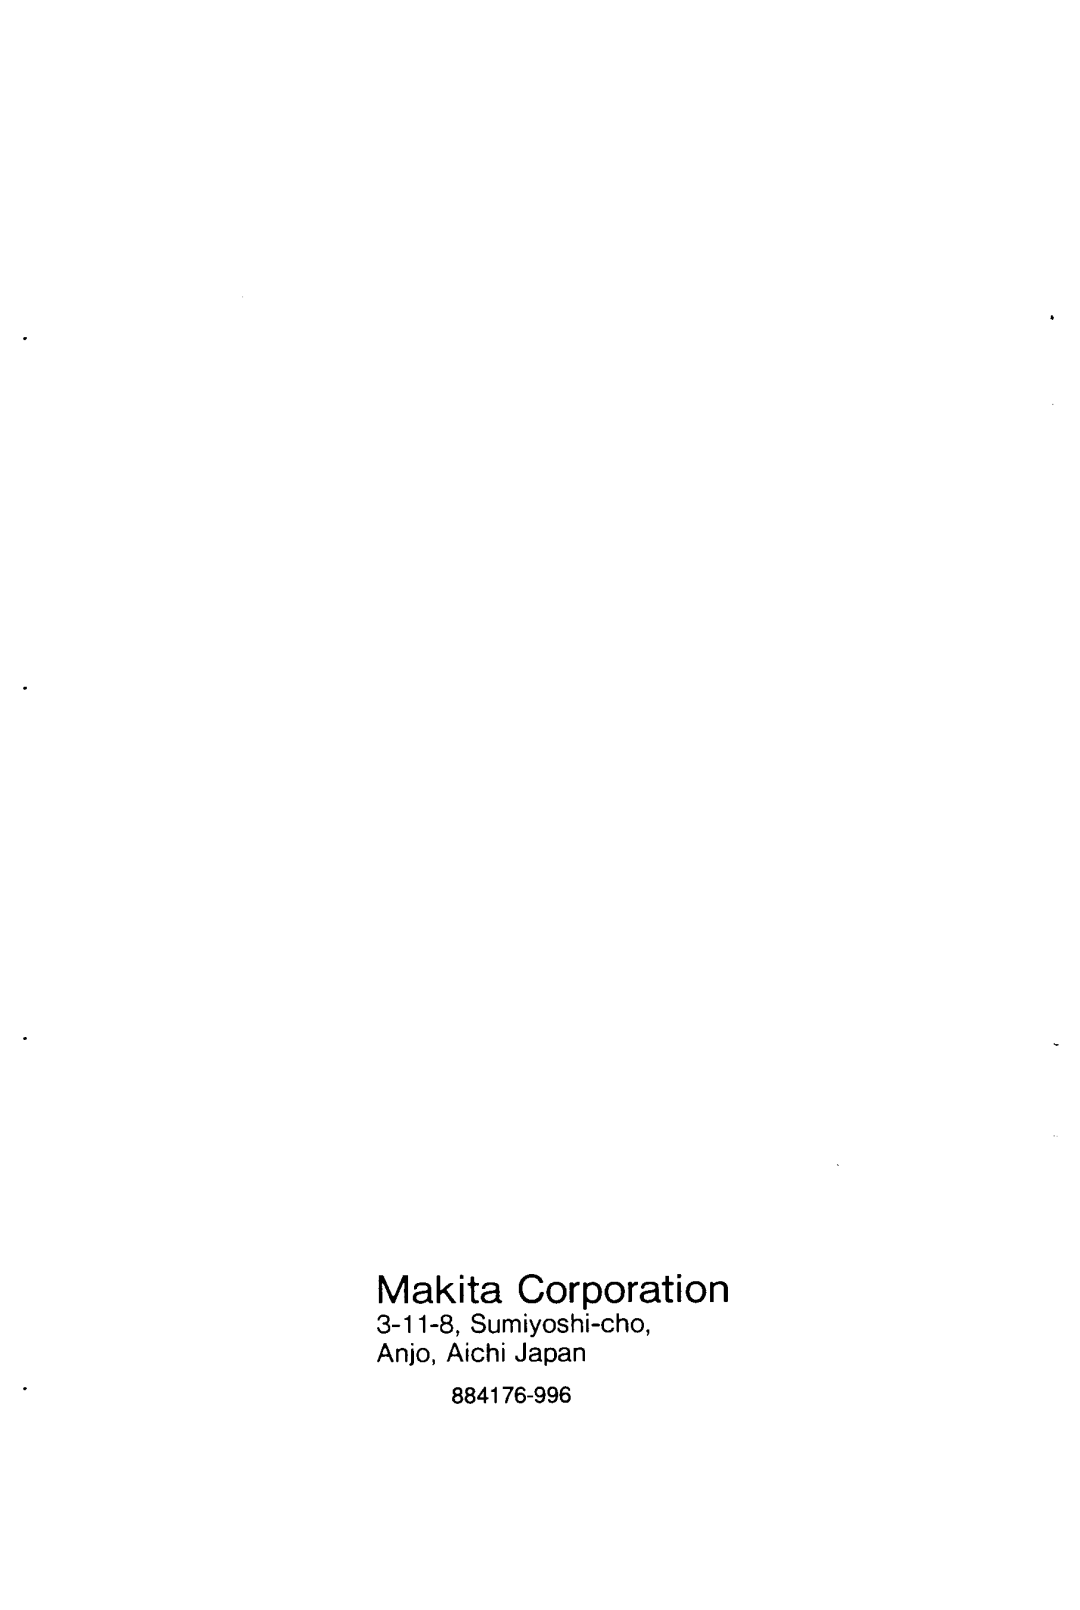 Makita ML140, ML120 manual Makita Corporation, Anjo, Aichi Japan, 3-1 1-8, Sumiyoshi-cho, 884176-996 